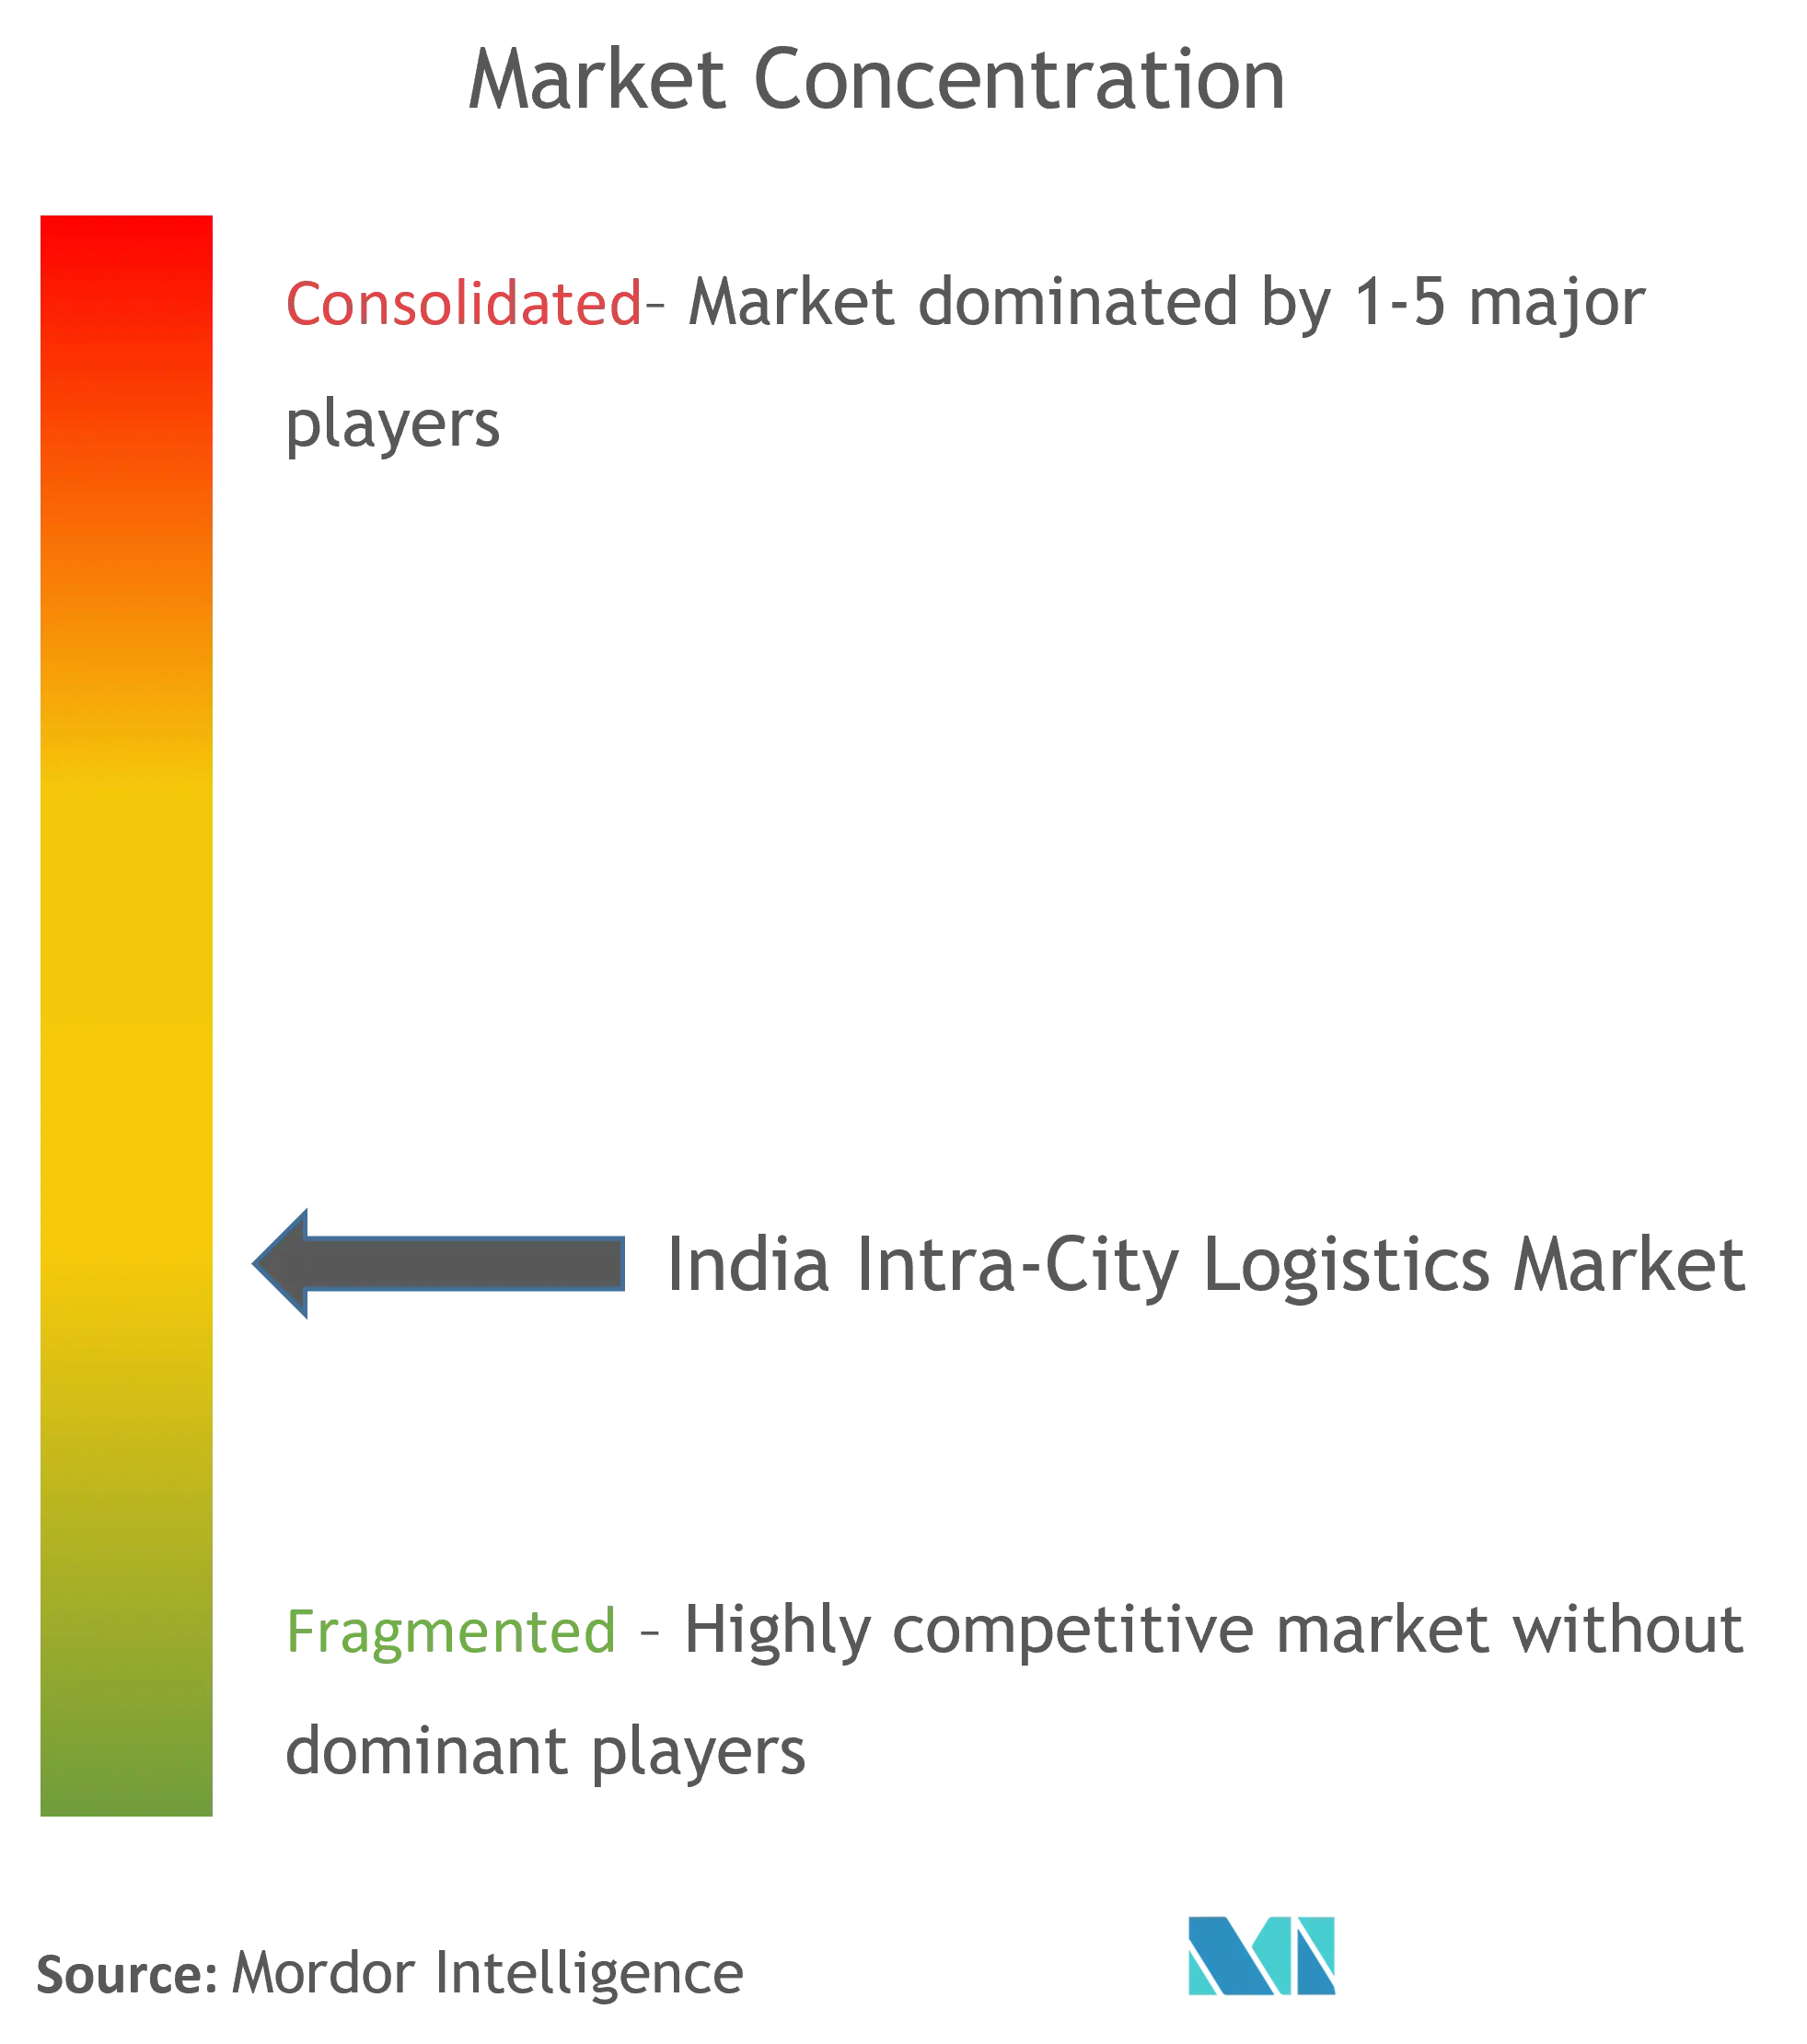  FM Logistic India, Lets Transport, Shadowfax, Cogos Technologies, and Ecom Express